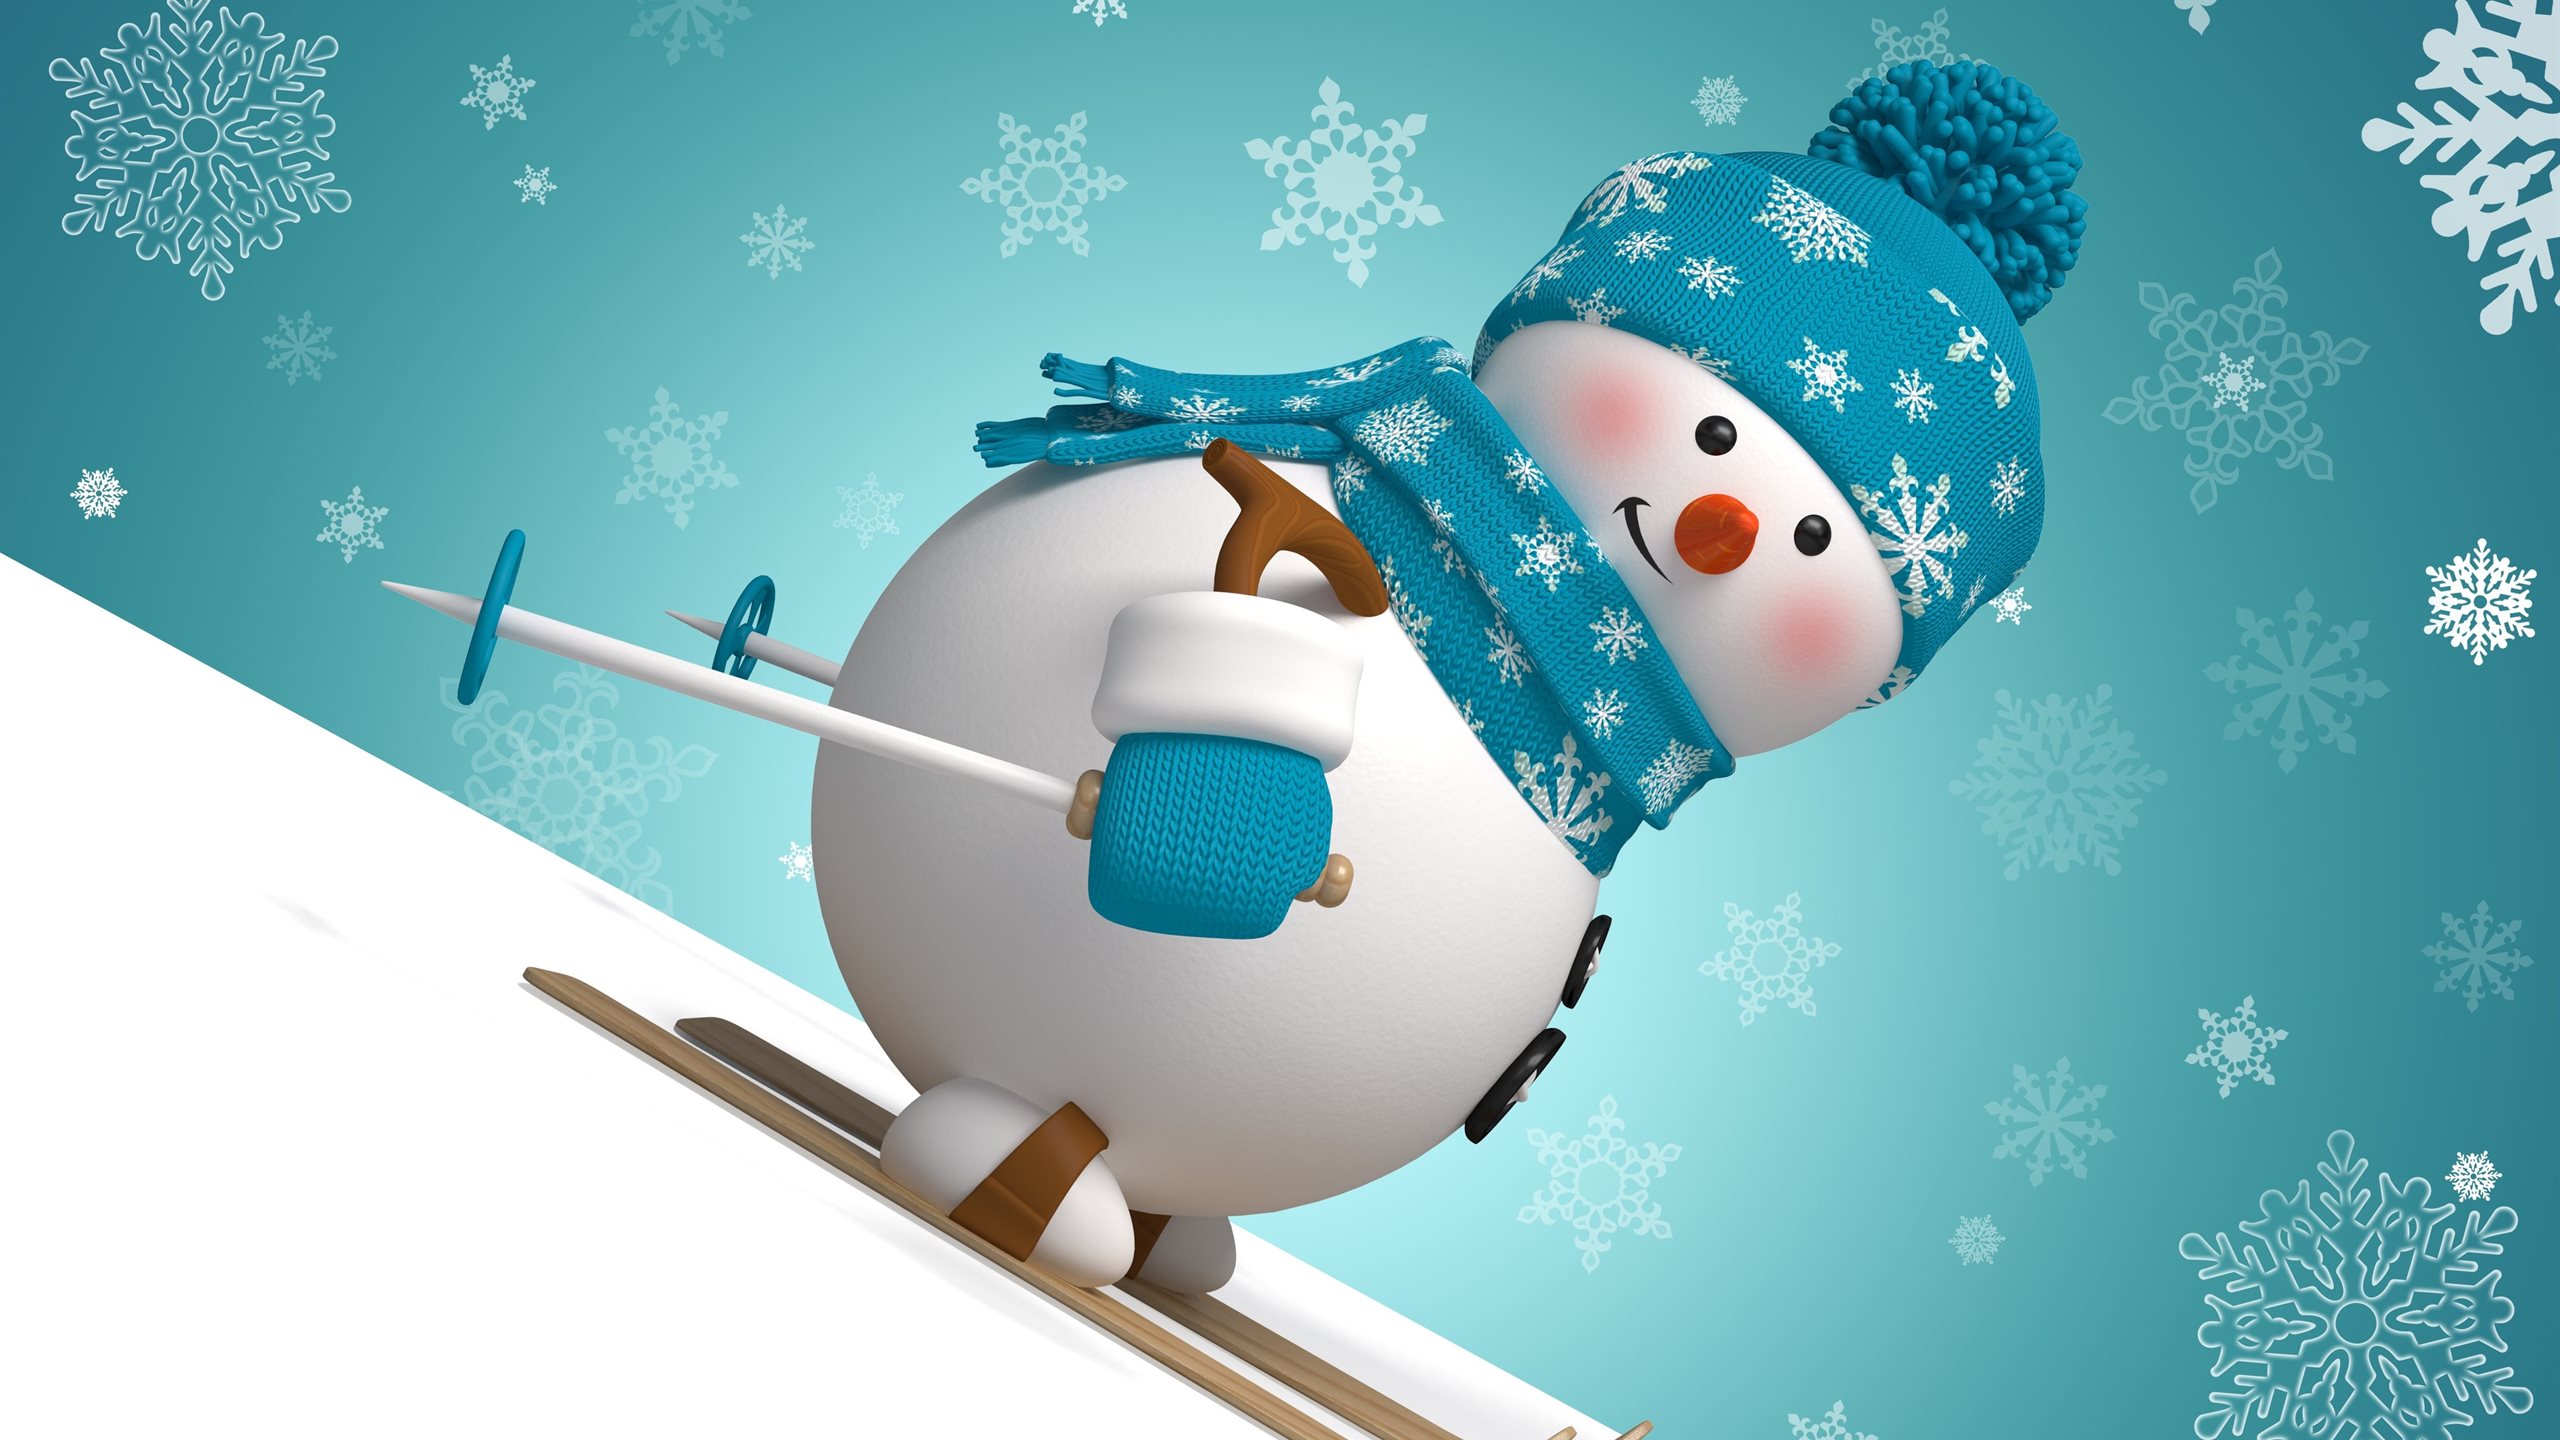 snowman wallpaper hd,snowman,snow,winter,illustration